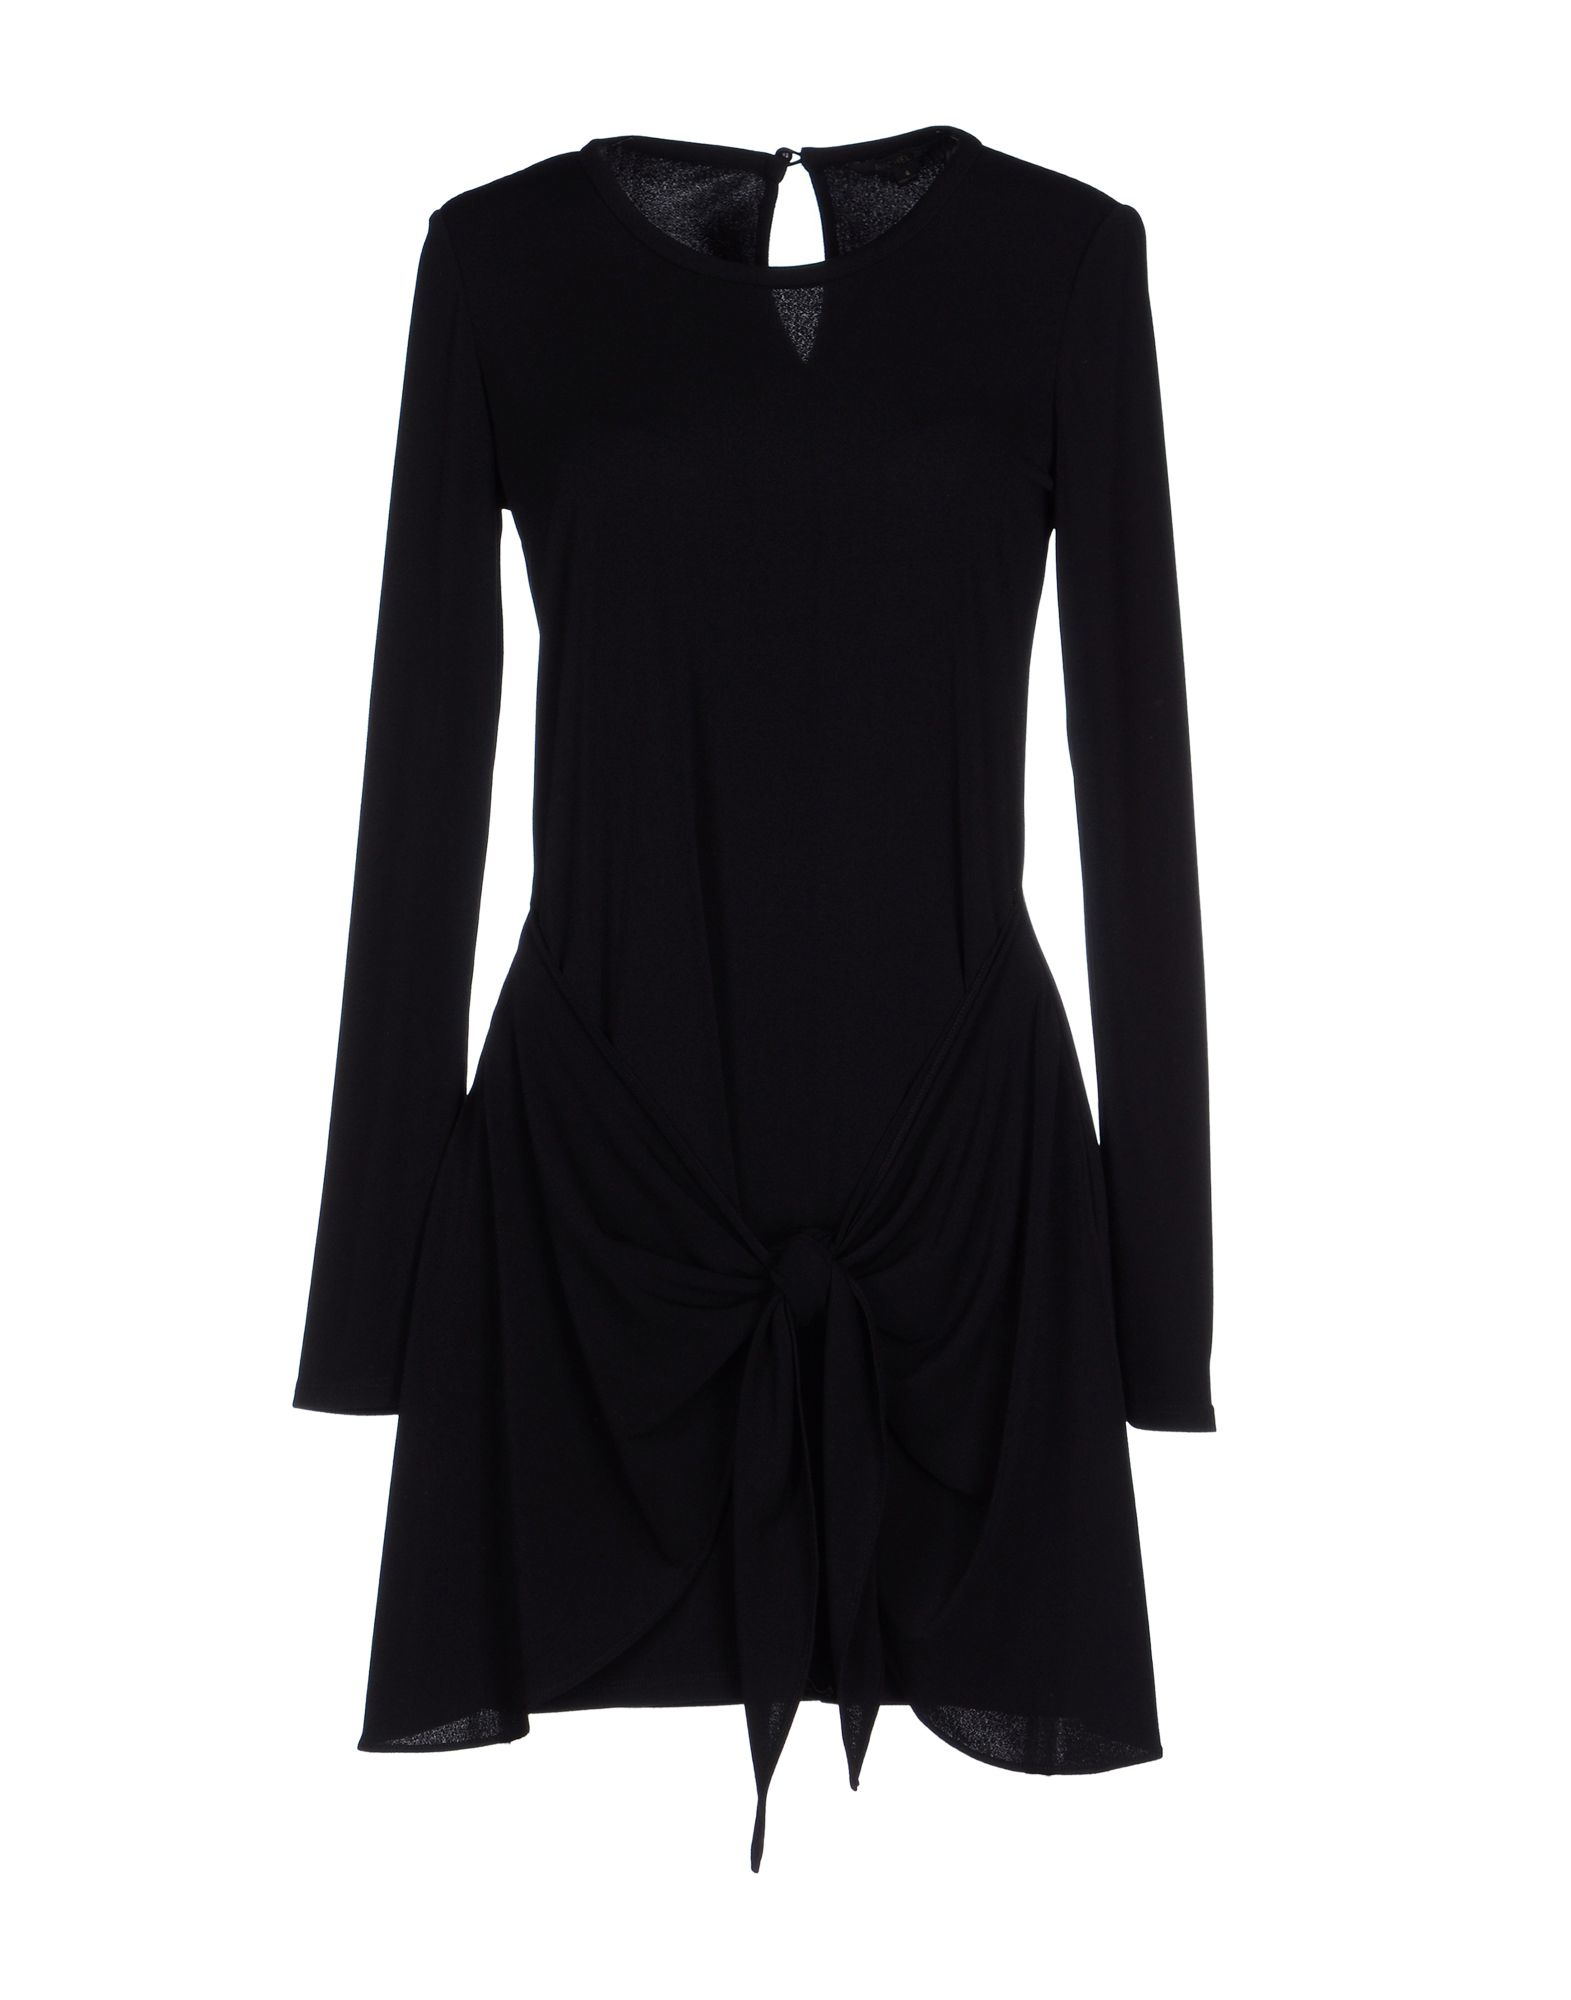 Rachel zoe Short Dress in Black - Save 74% | Lyst